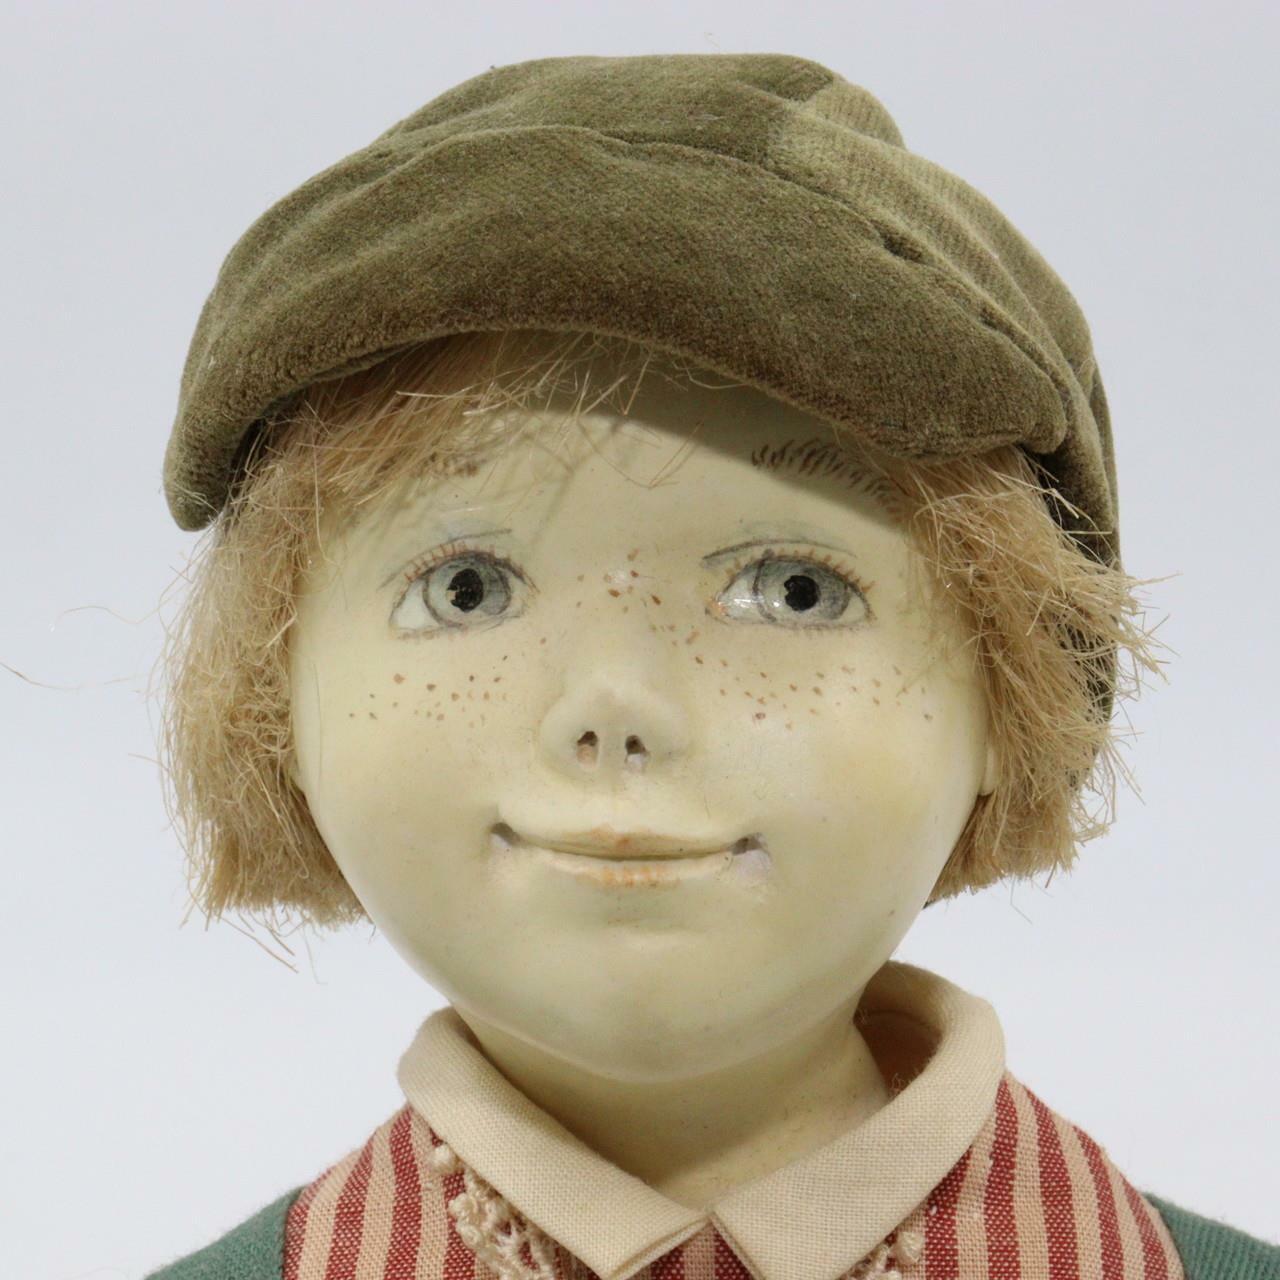 Japanese Vintage Wooden Boy Doll 1984 November sadako signed boy WO117